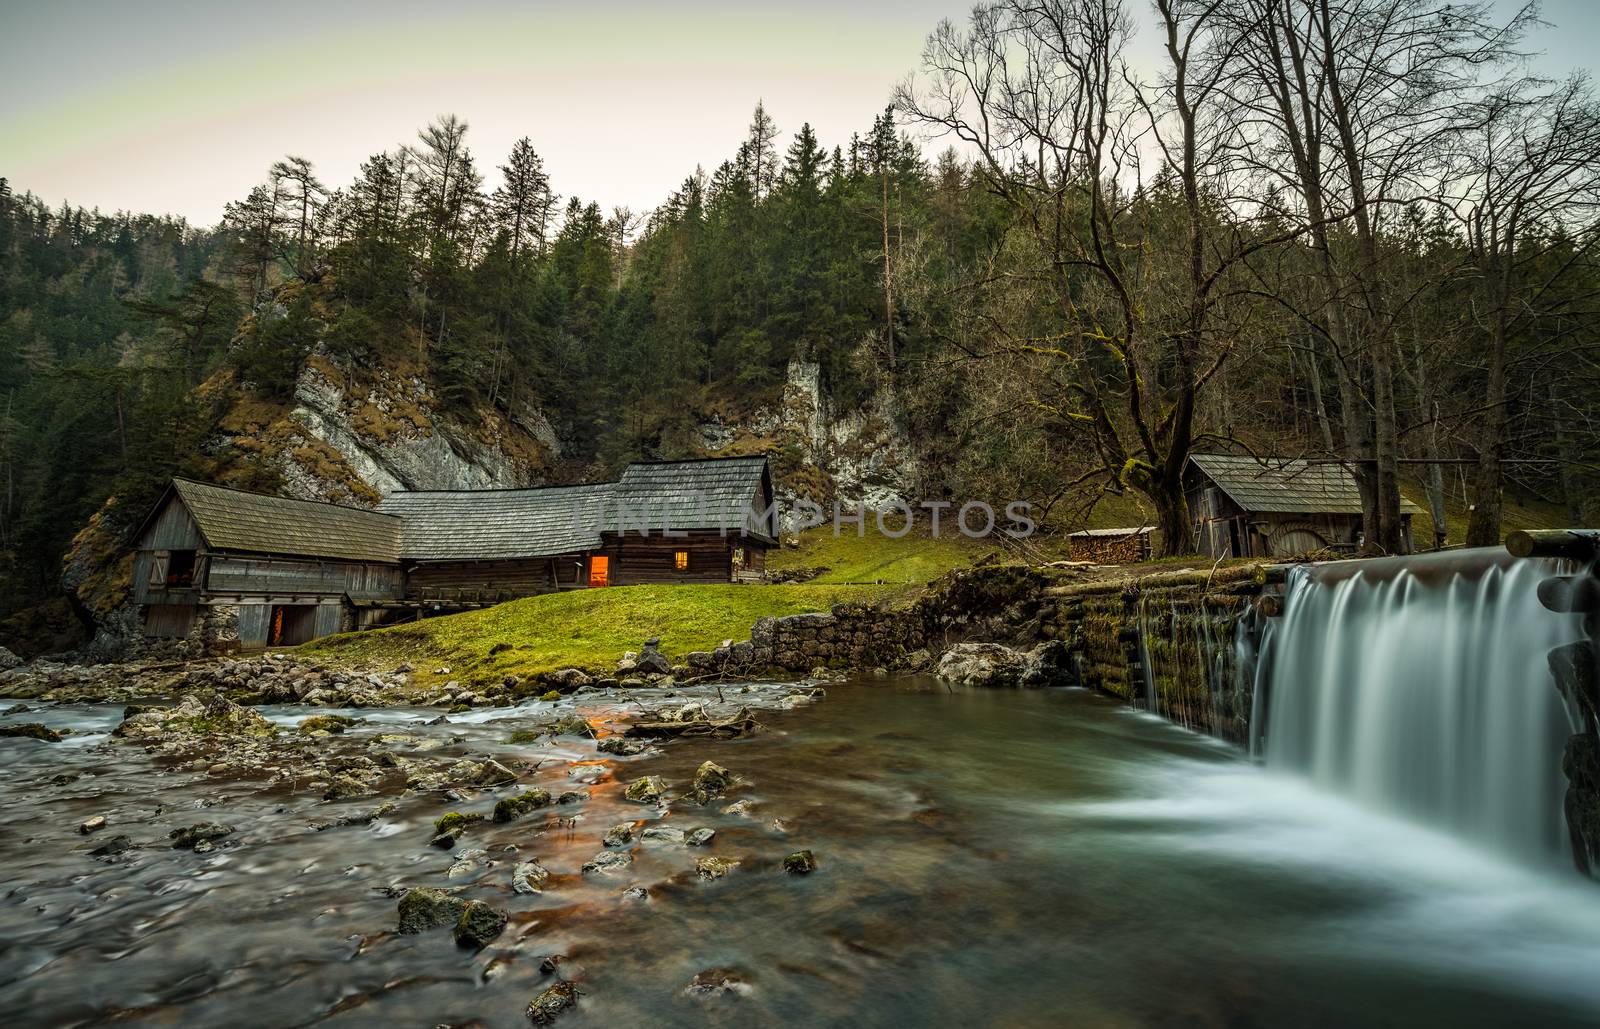 Old wooden water mill at National Nature Reserve Kvacianska dolina in Slovakia by nickfox